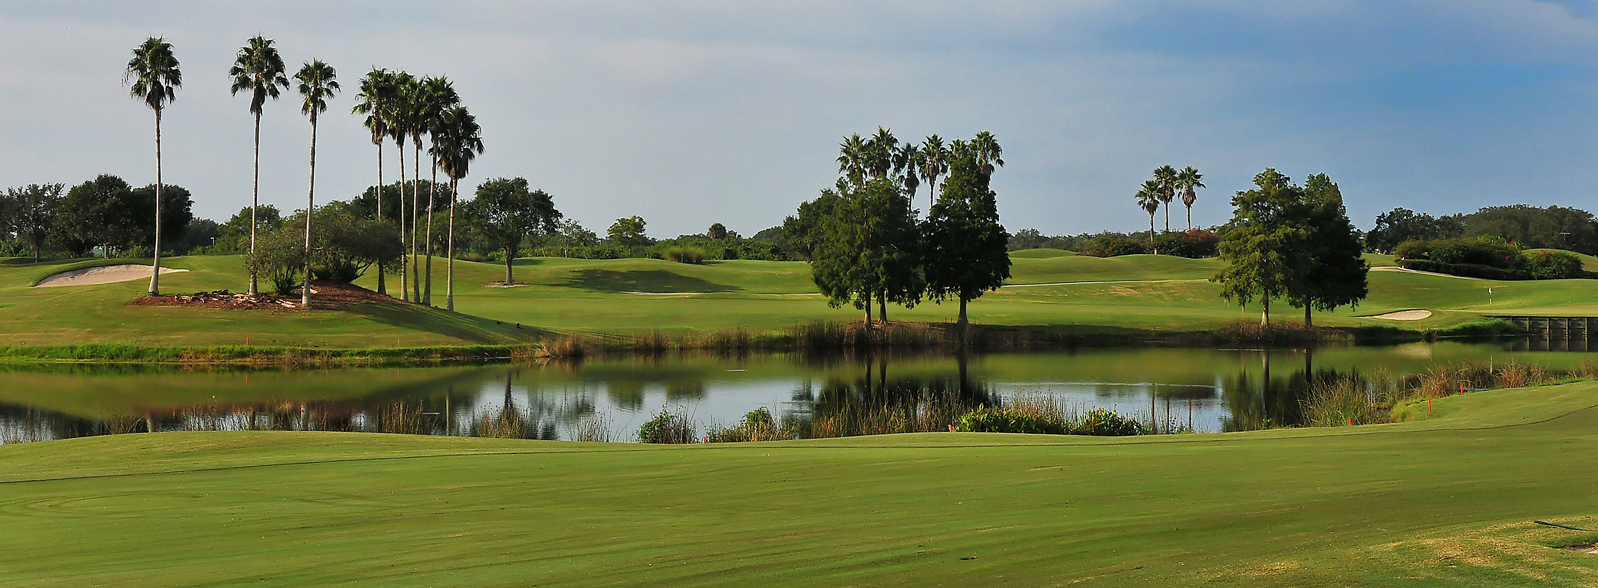 Wellen Park Golf & Country Club - Reviews & Course Info